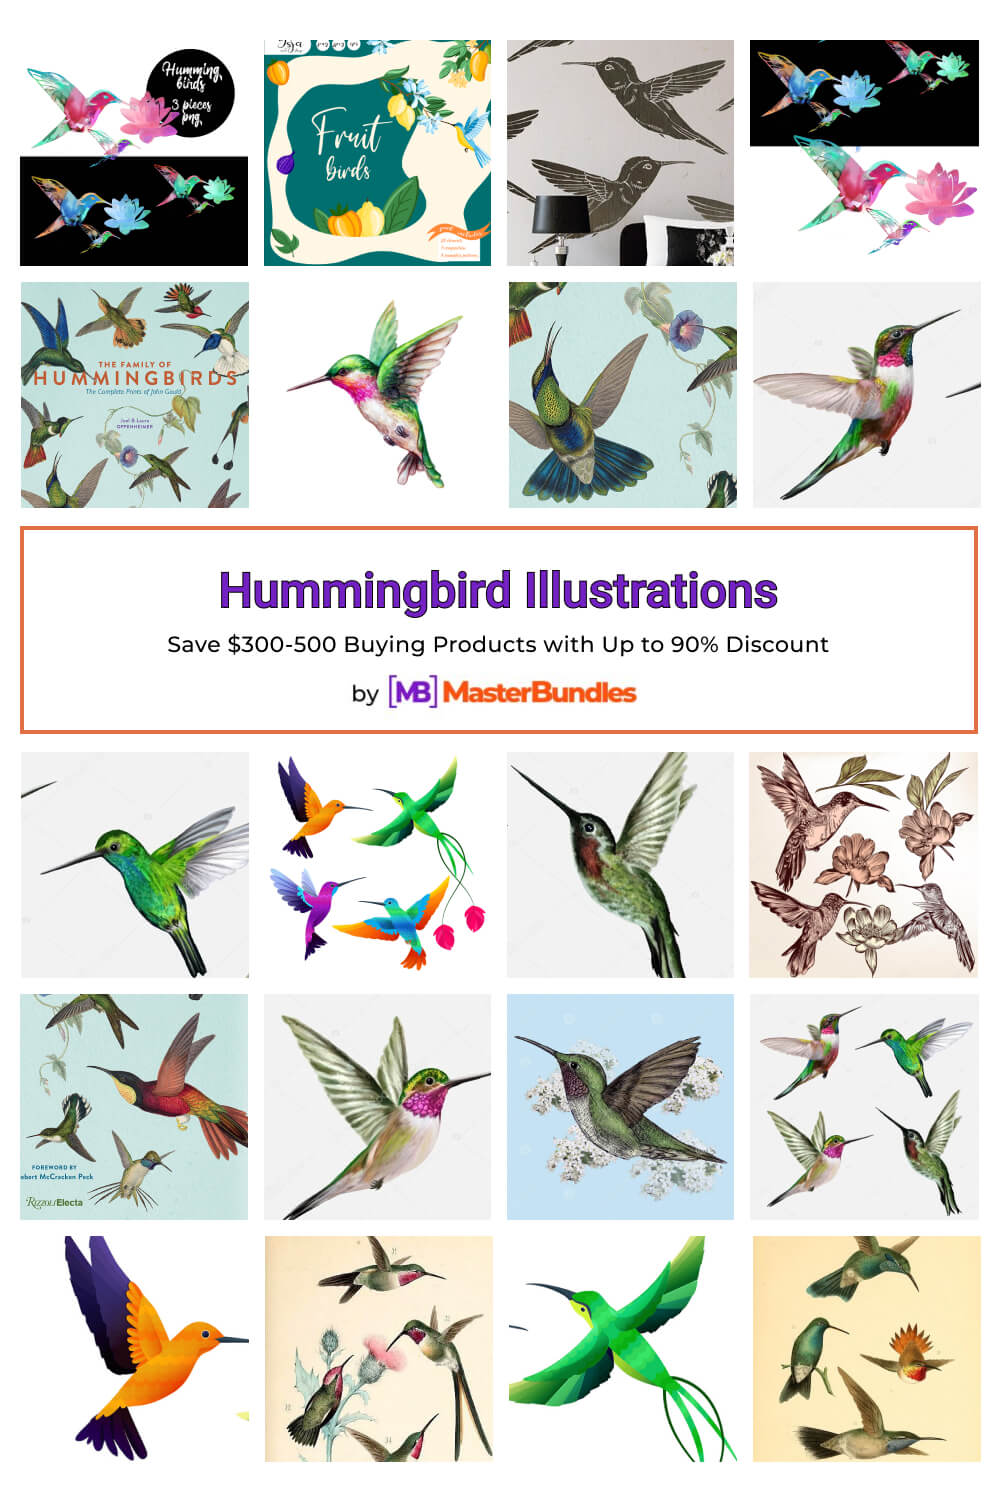 hummingbird illustrations pinterest image.